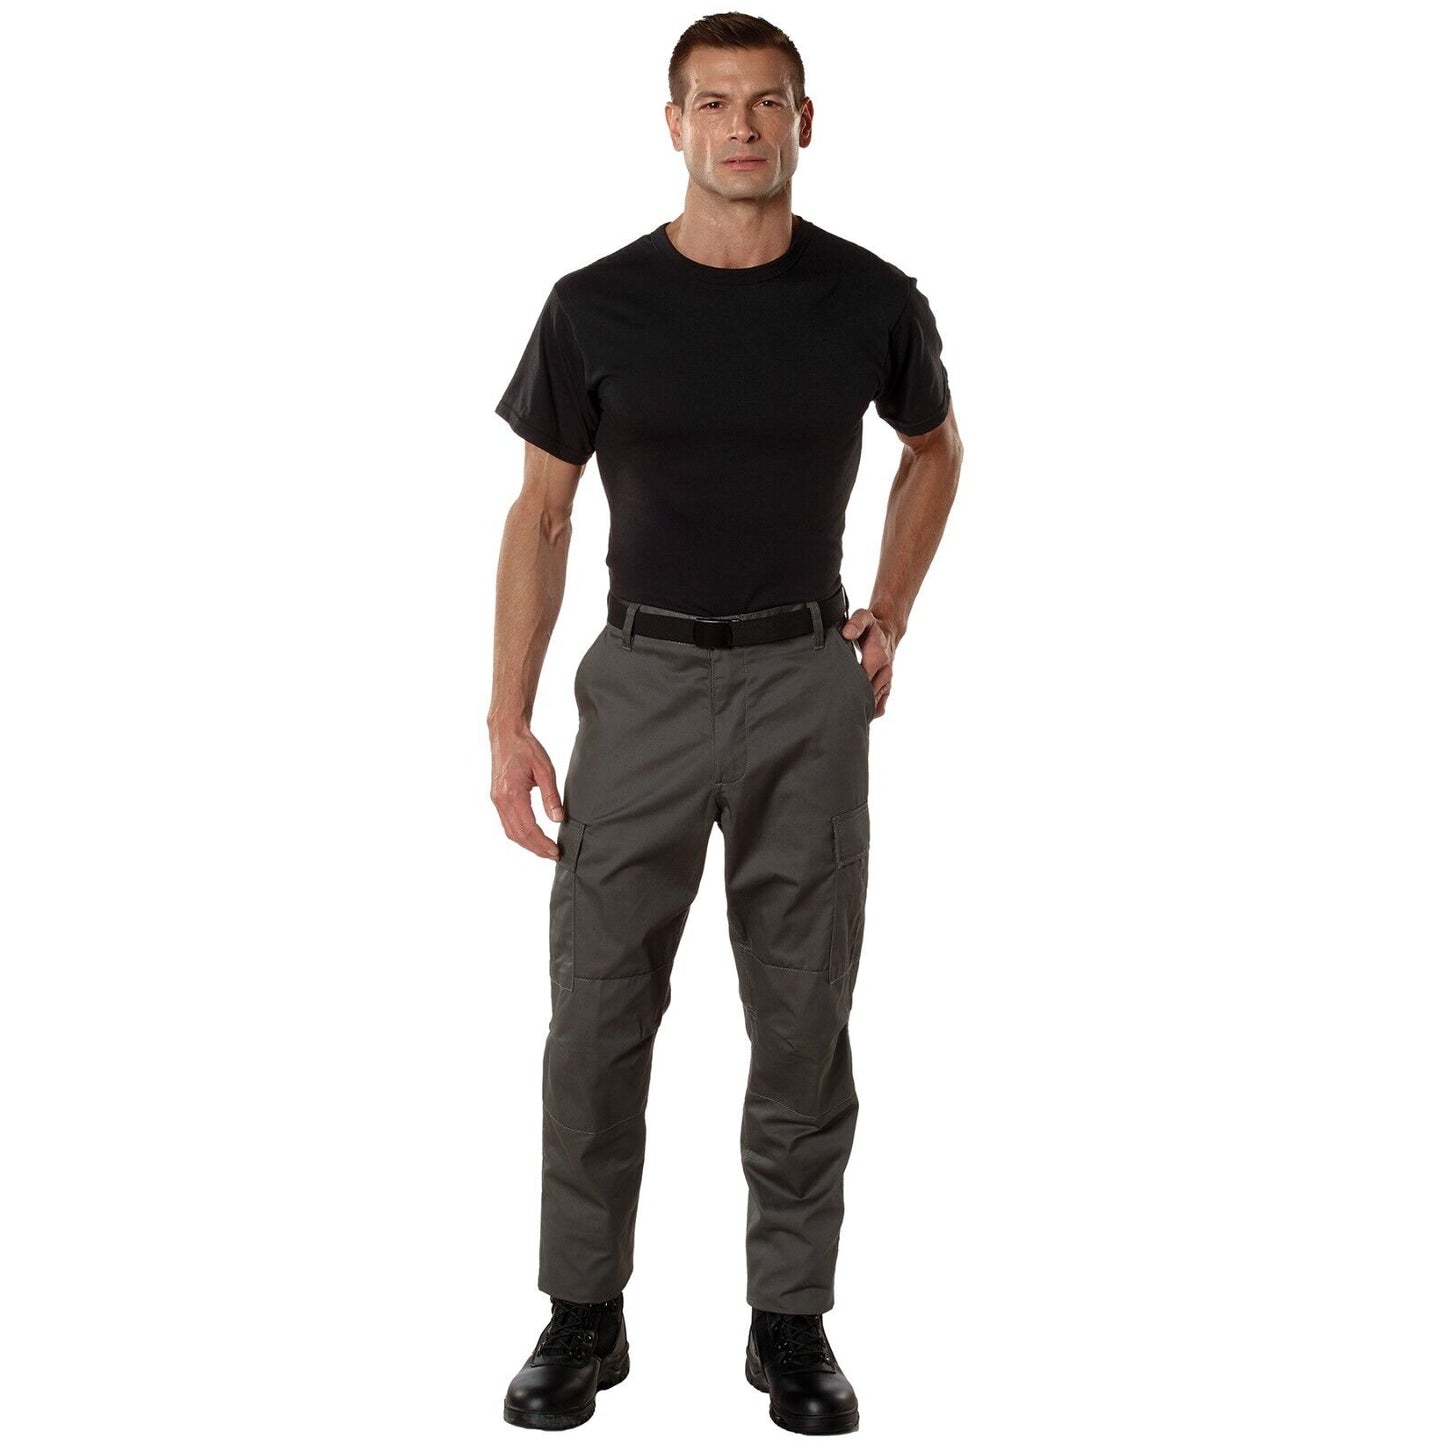 Men's Charcoal Grey BDU Pants - Rothco Tactical Cargo Fatigues